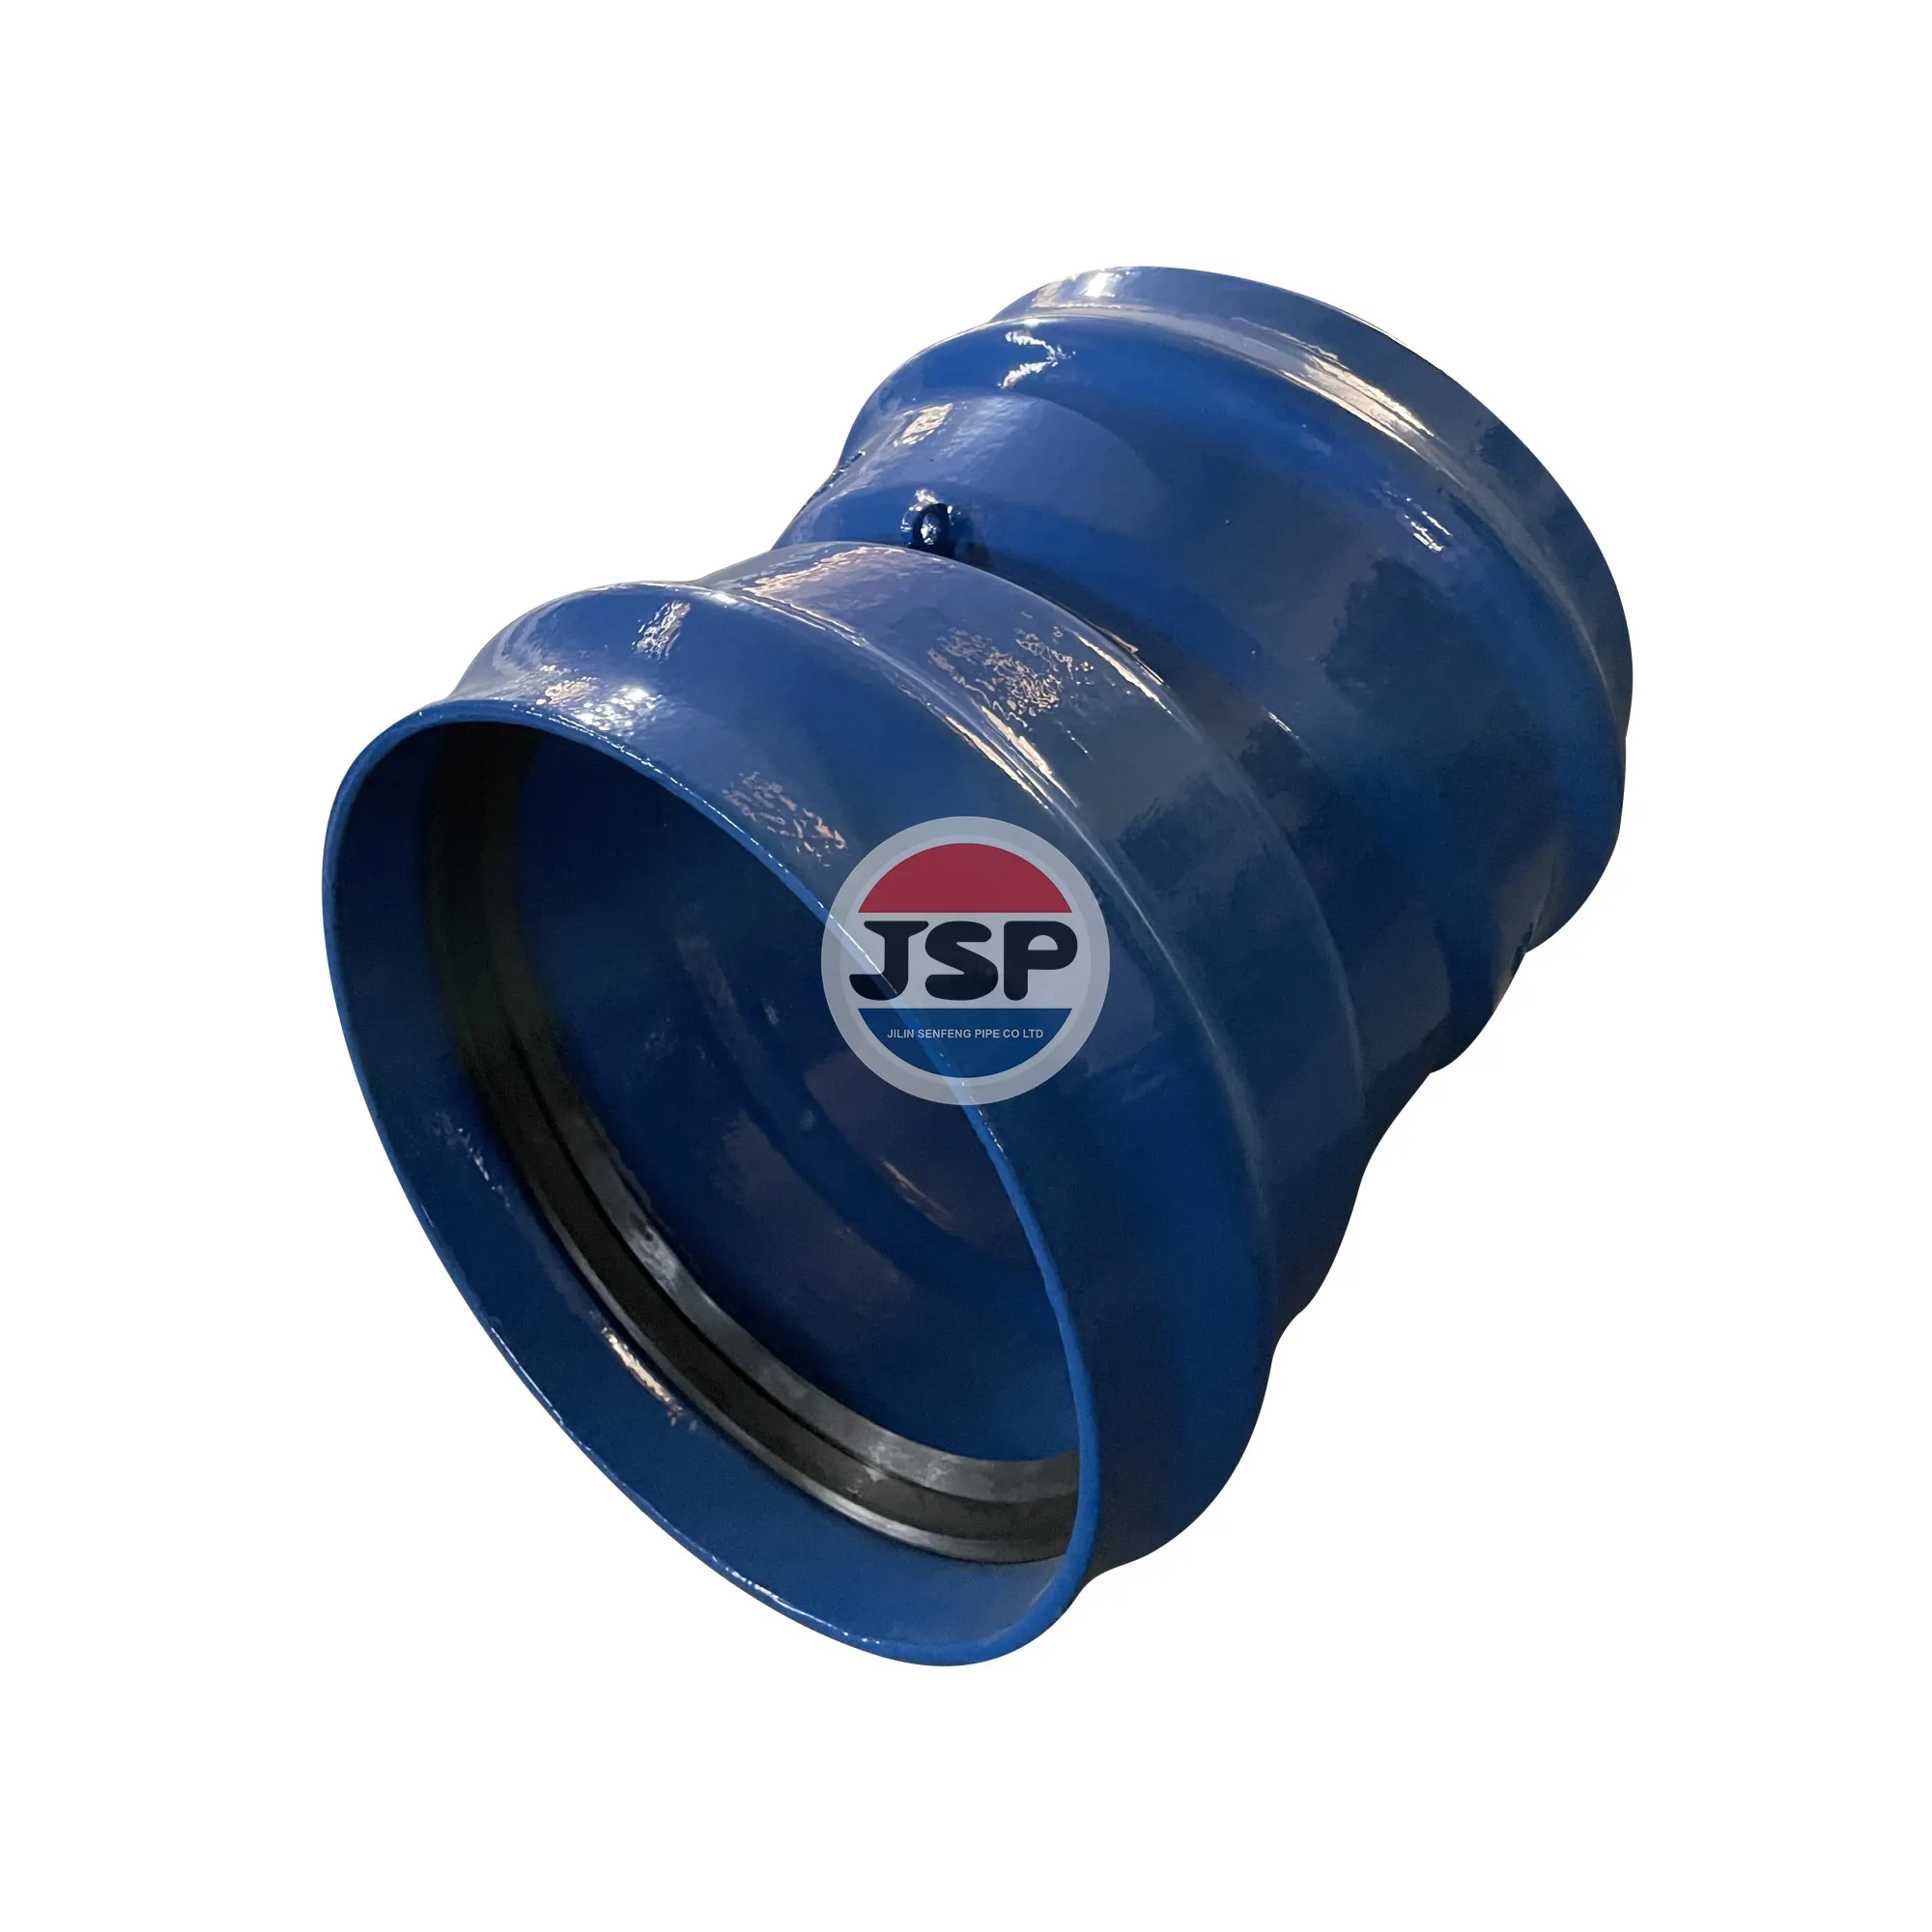 Raccords en fonte ductile JSP Raccord de tuyau à douille en PVC en fonte ductile Raccords en fonte ductile à double douille pour tuyaux en PVC